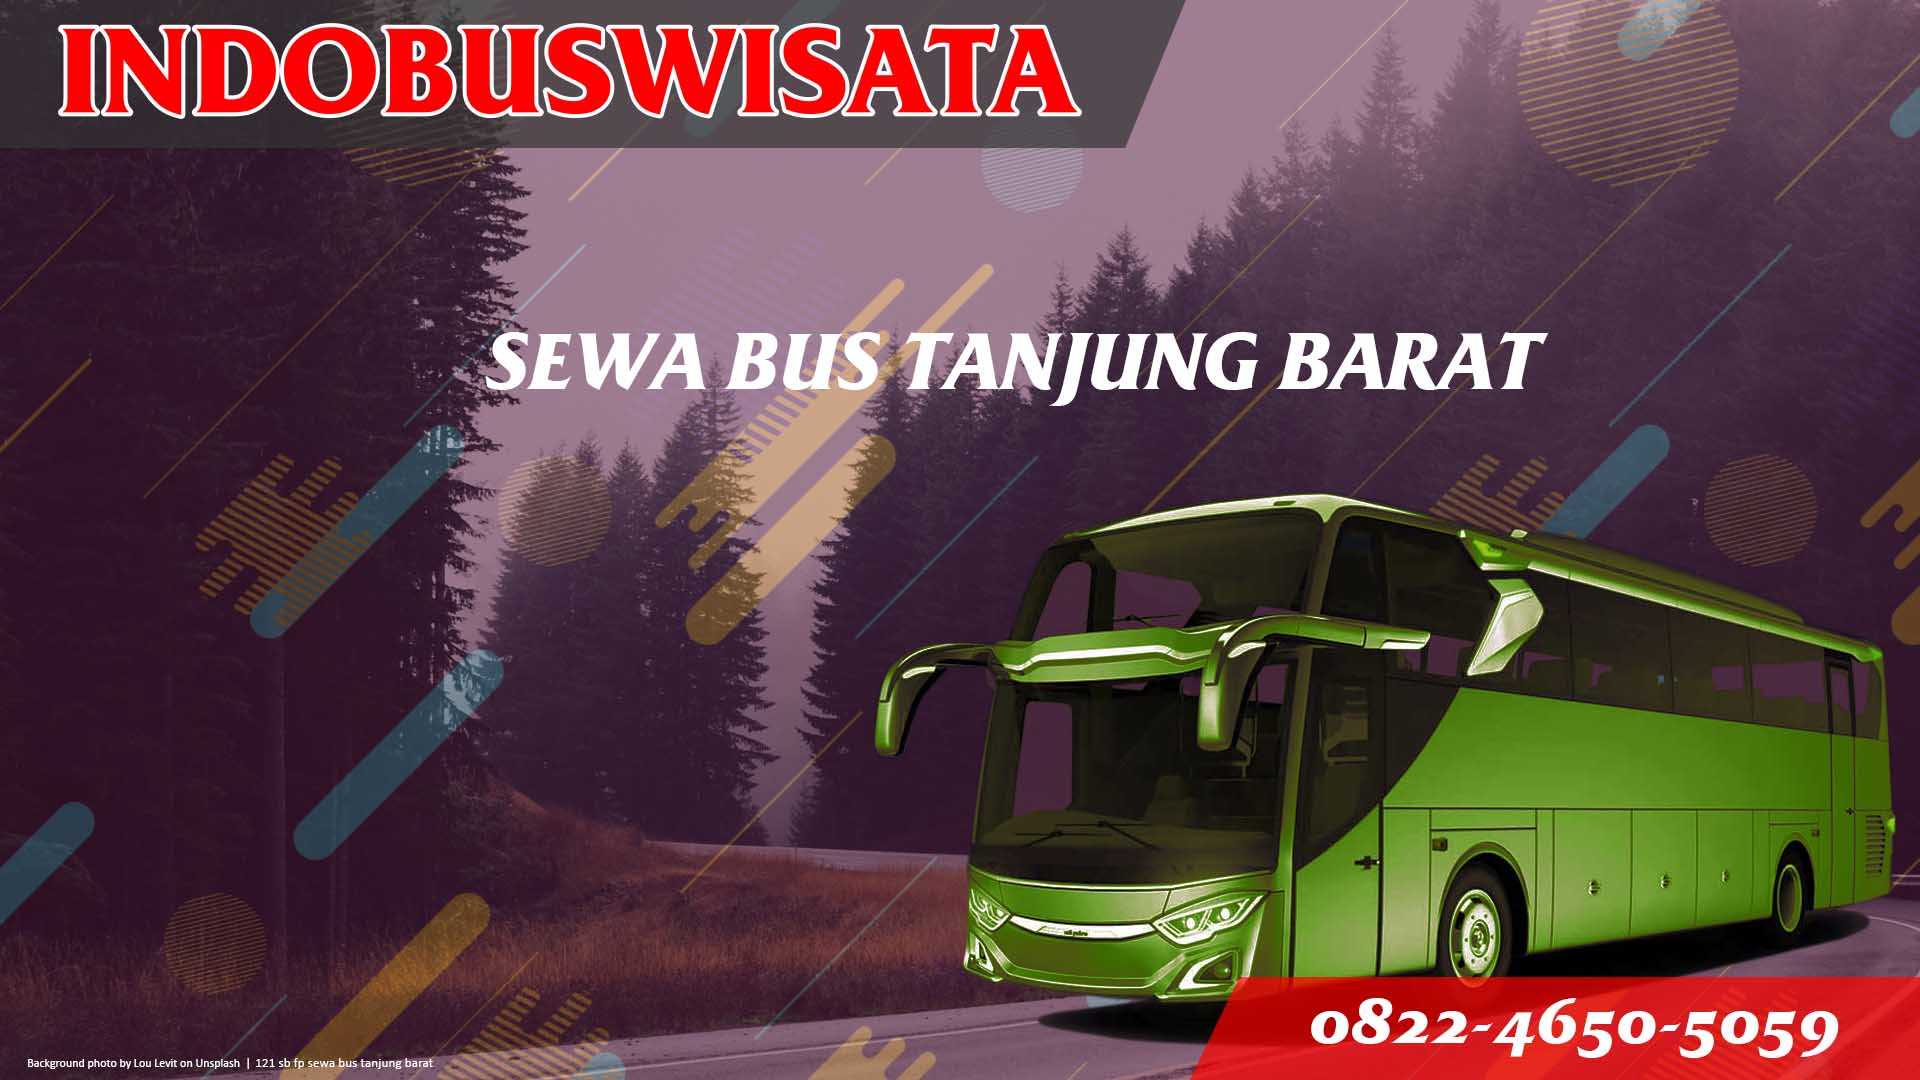 121 Sb Fp Sewa Bus Tanjung Barat Jb 3 Hdd Indobuswisata